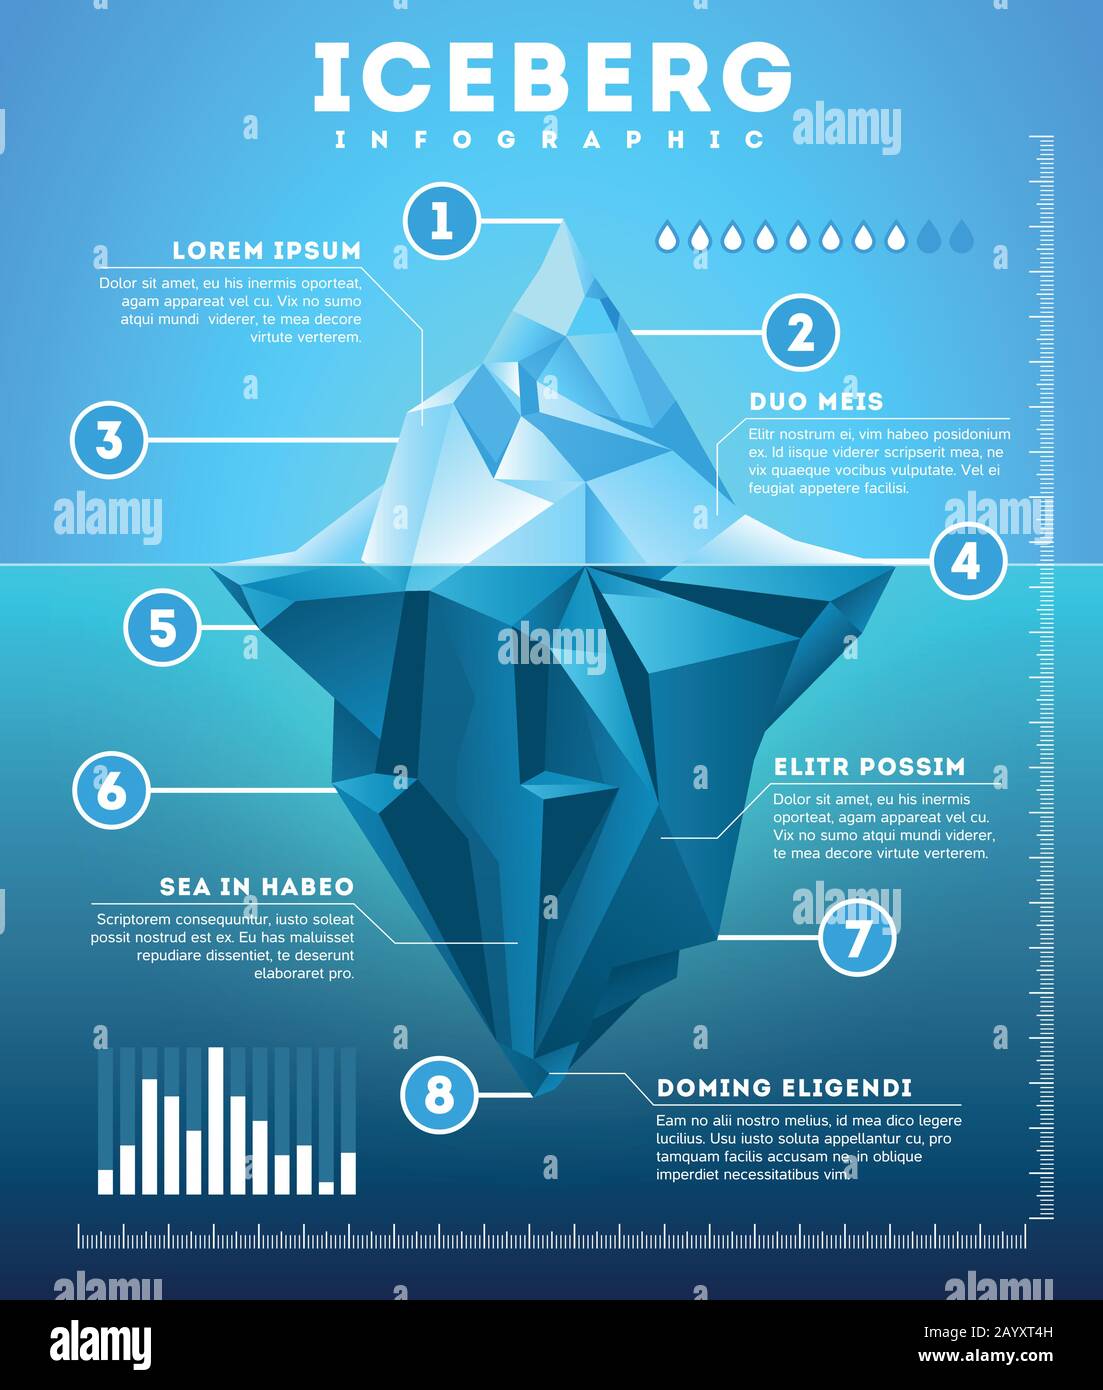 Infografik zu Vector Iceberg. Iceberg Template Business Metapher, Financial Info Polygon Iceberg Illustration Stock Vektor